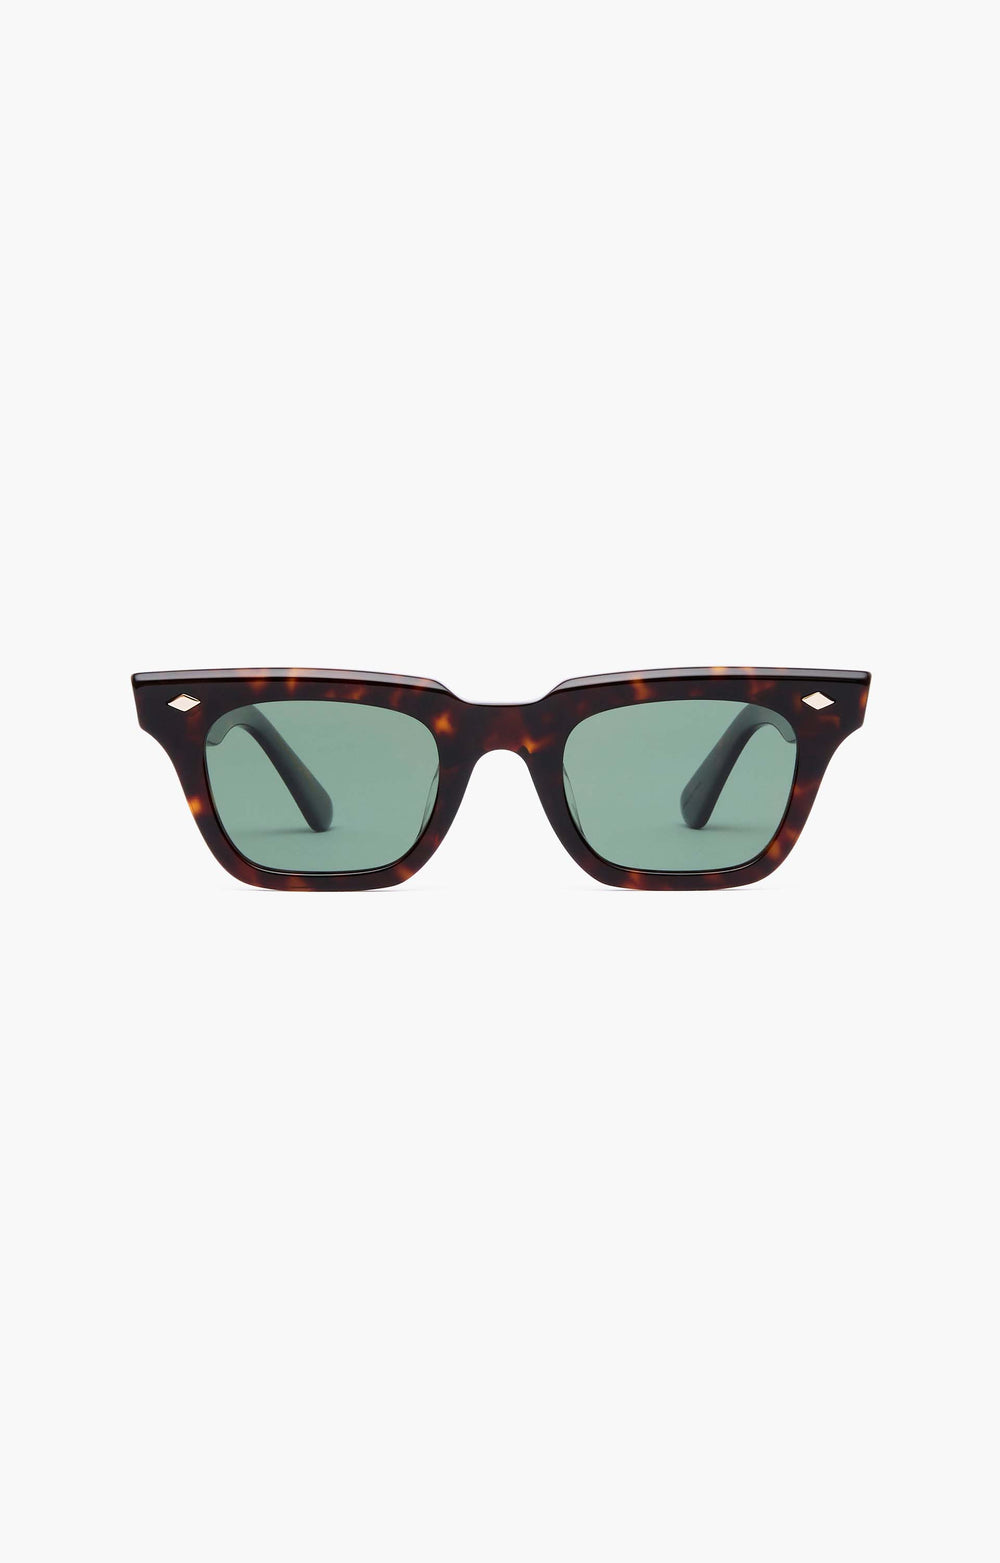 Epokhe Stereo Sunglasses, Tortoise Polished/Green Polarized